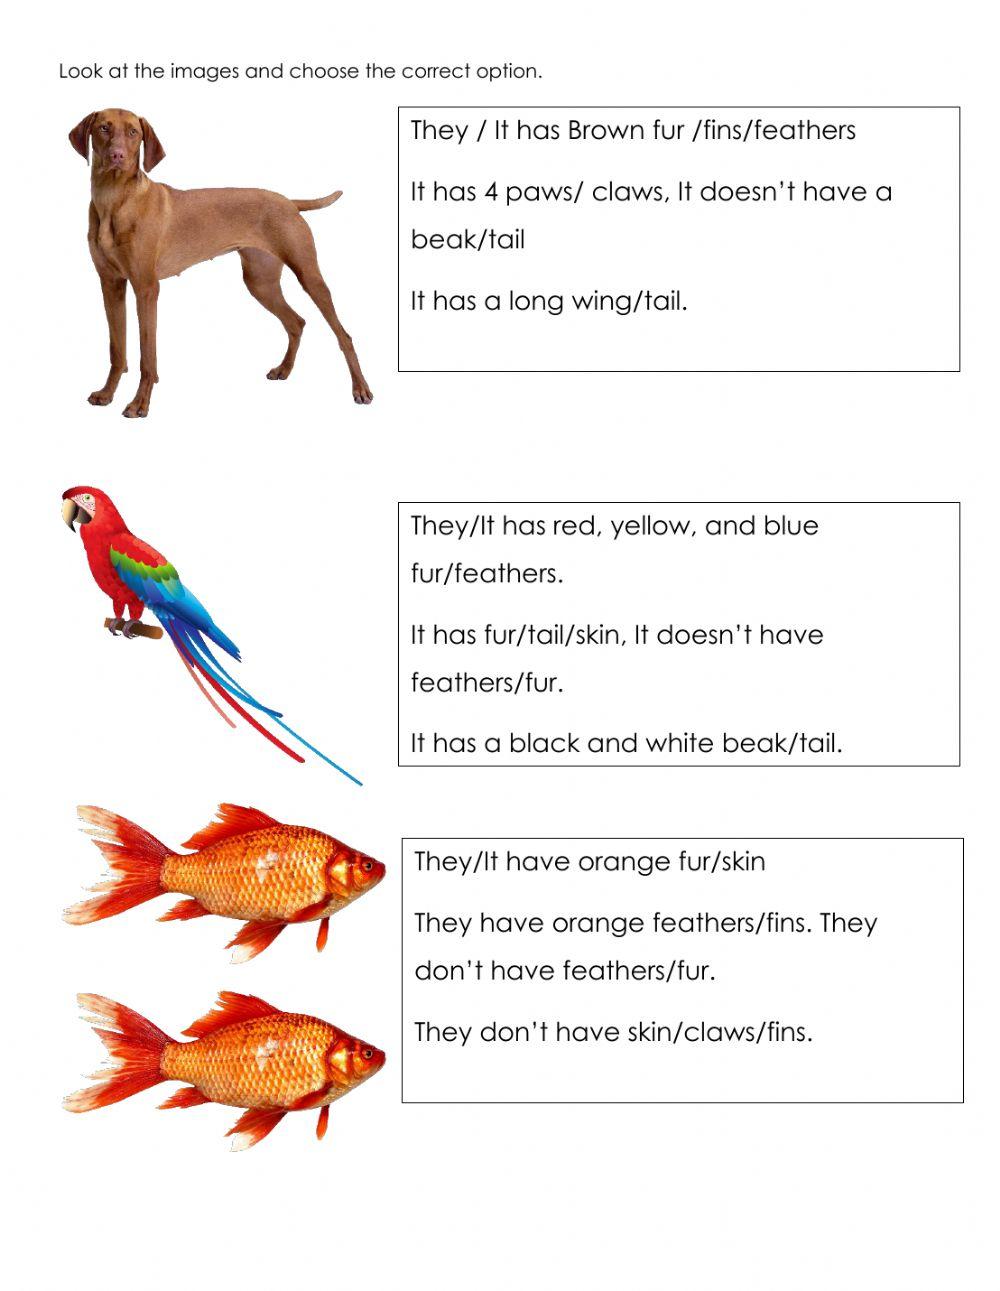 Animals' body parts and description